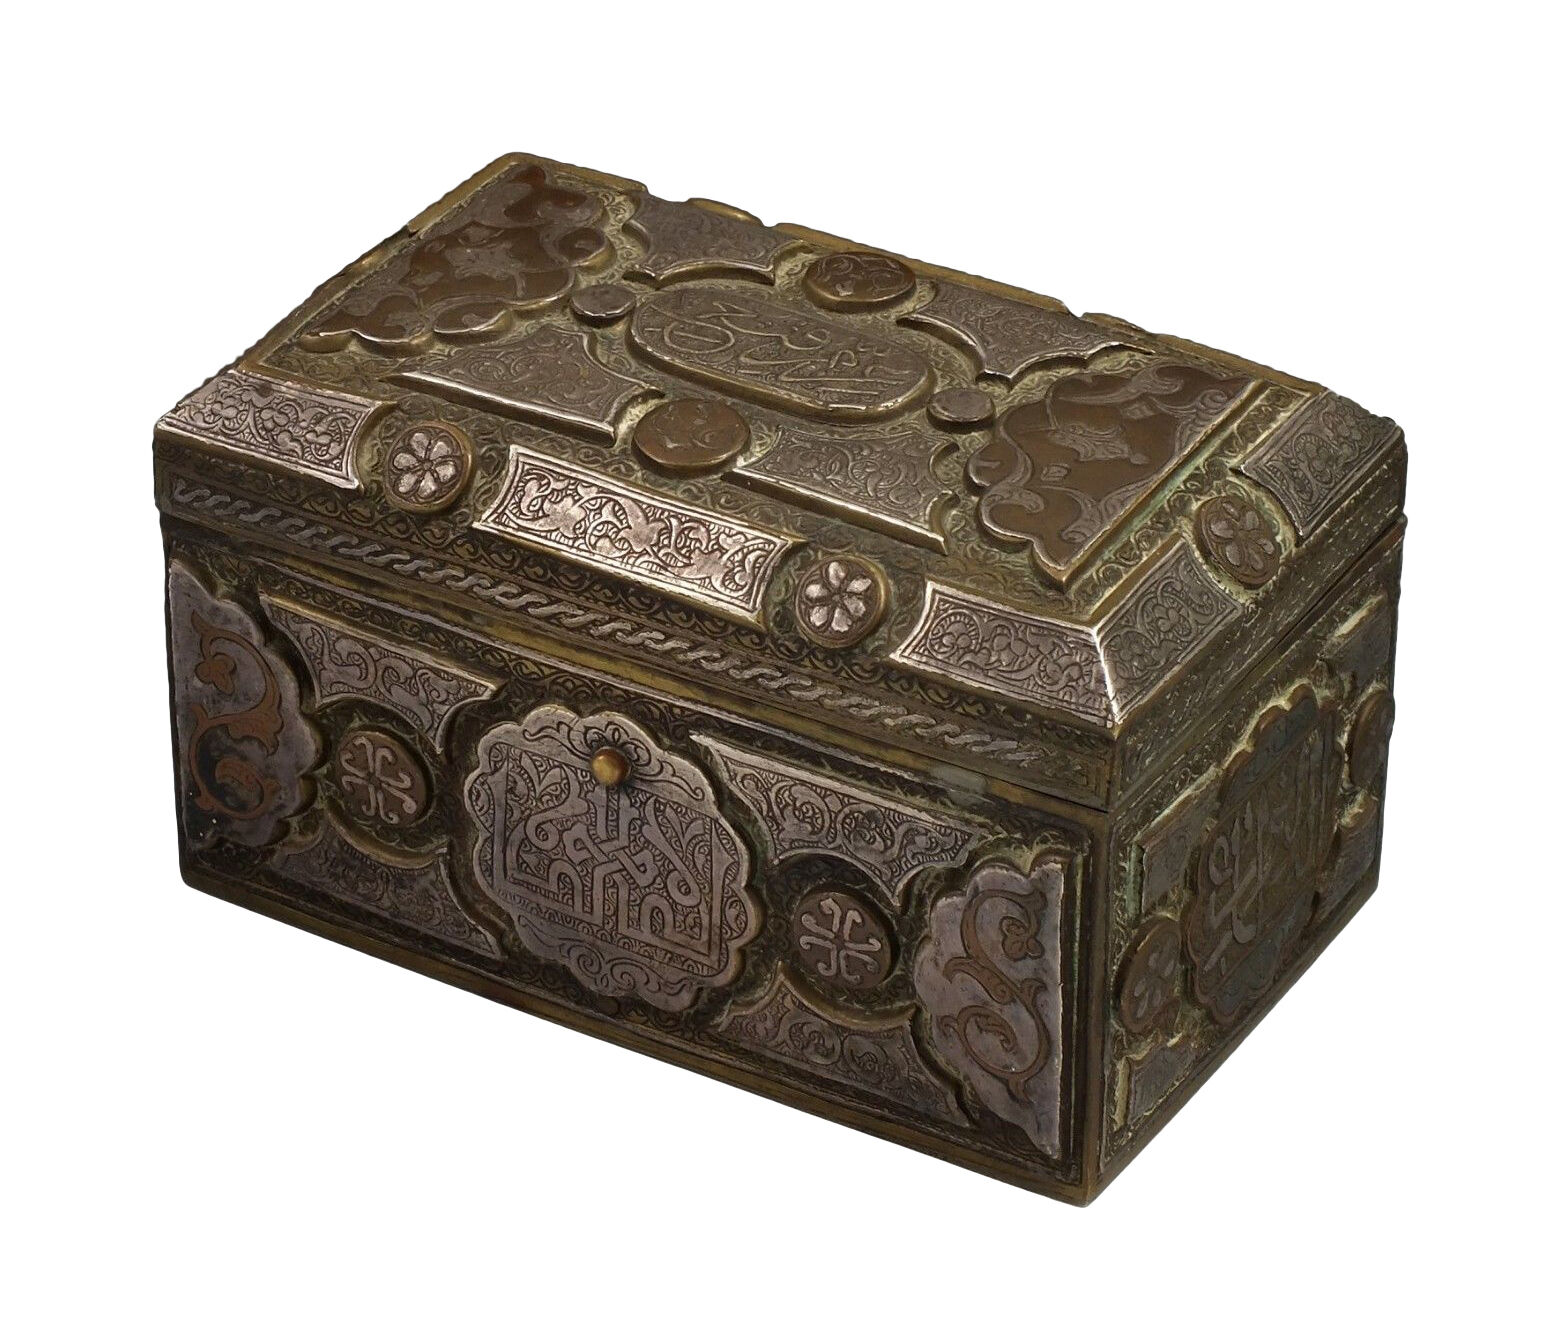 Fine 19thC Islamic Mixed Metals Casket Chest Box w/ Inlaid Wood Interior